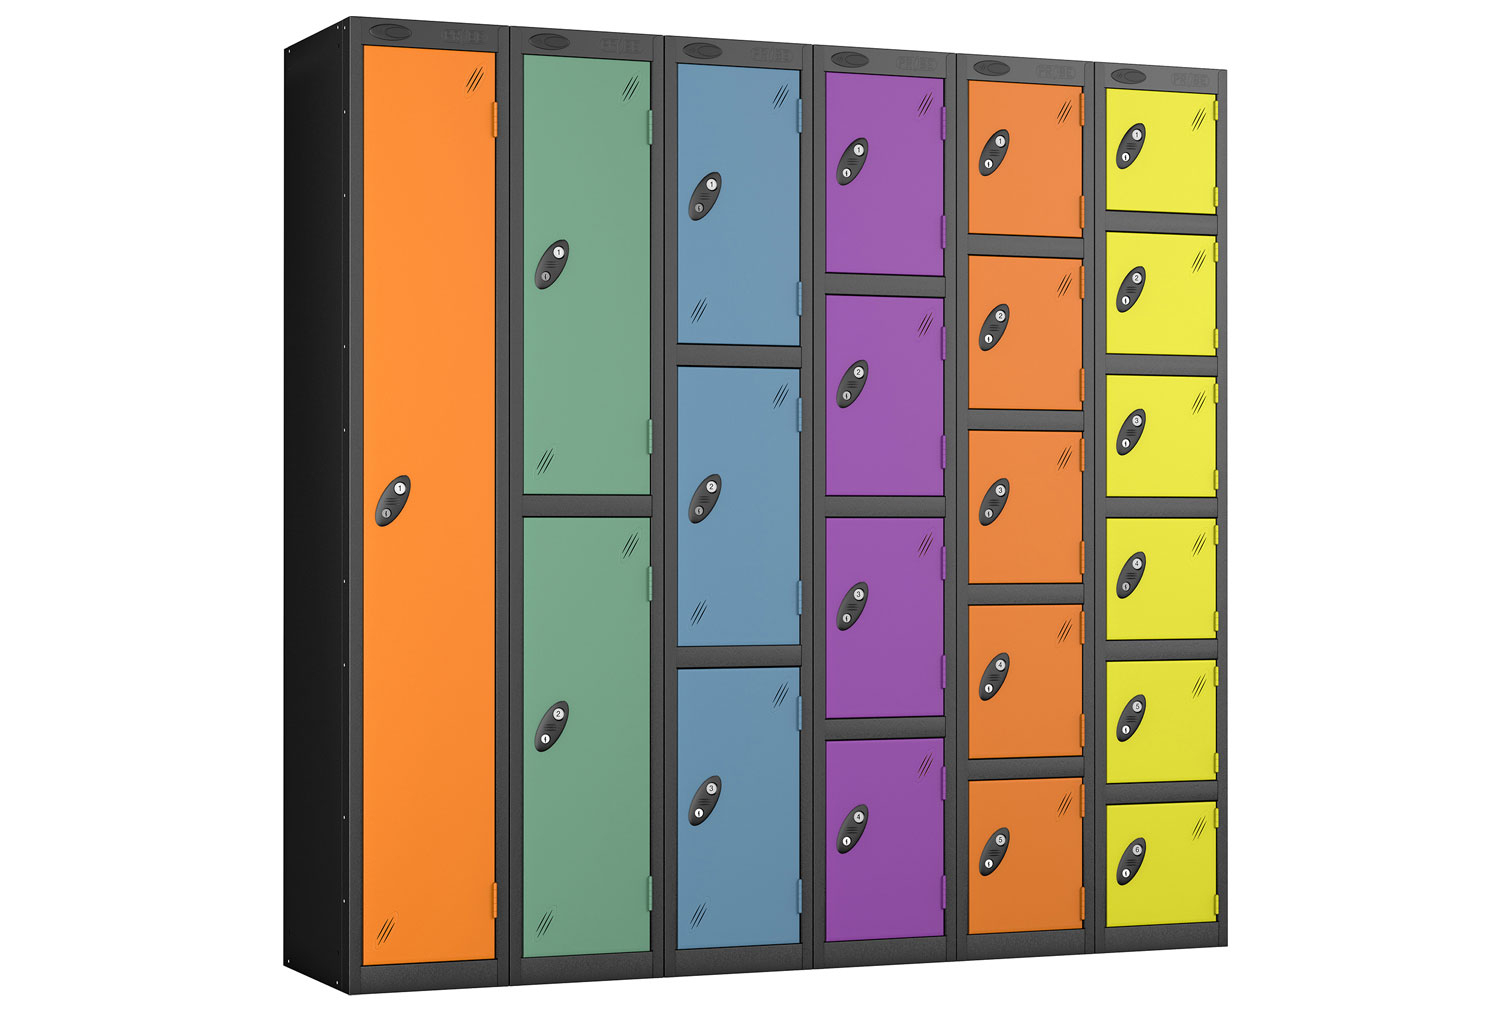 Probe Autumn Colour Lockers With Black Body, 6 Door, 31wx46dx178h (cm), Hasp Lock, Black Body, Ocean